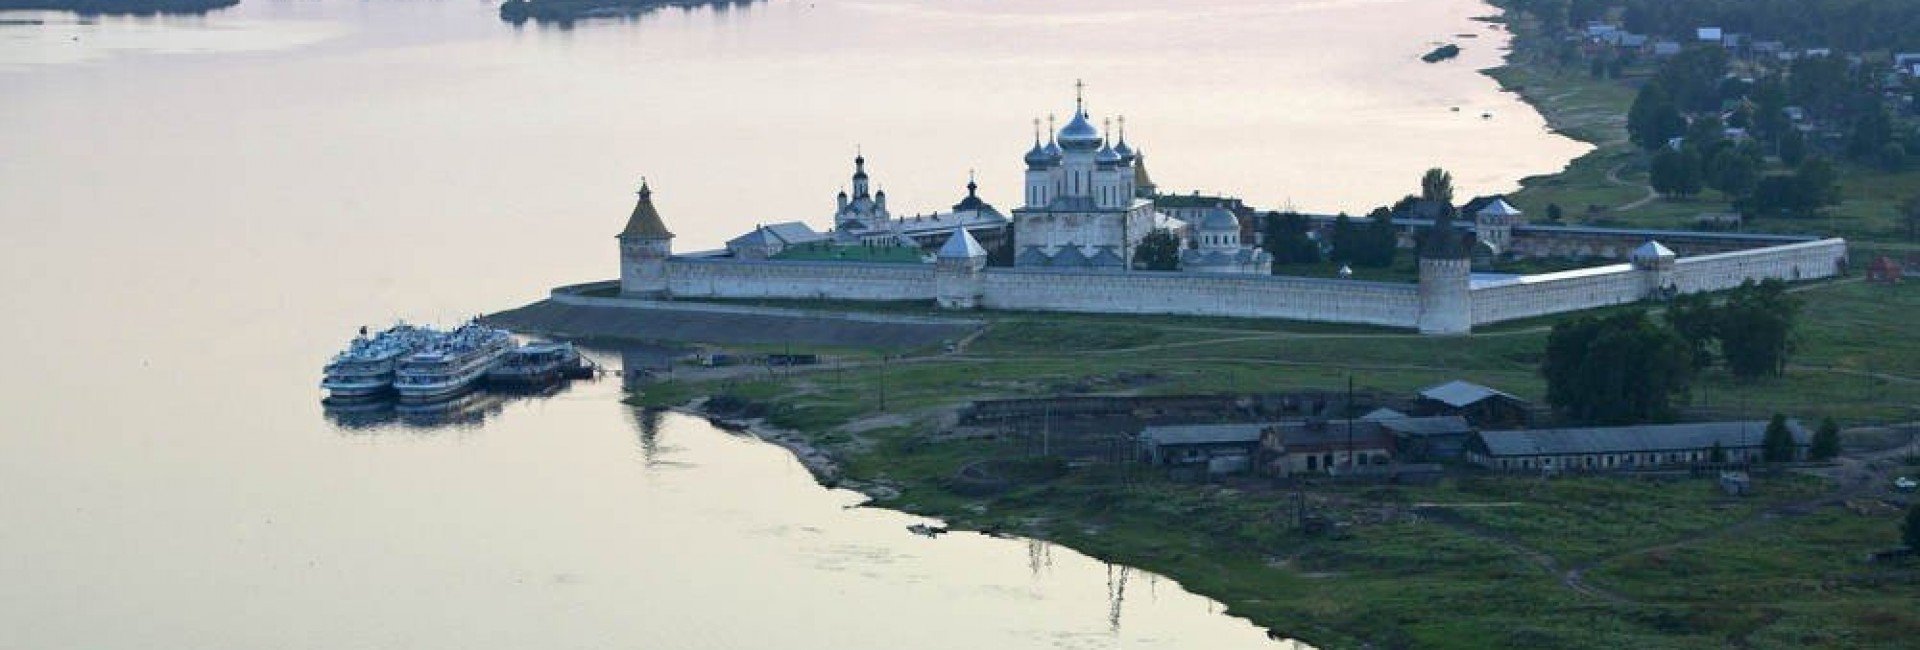 Монастырь на реке Волга